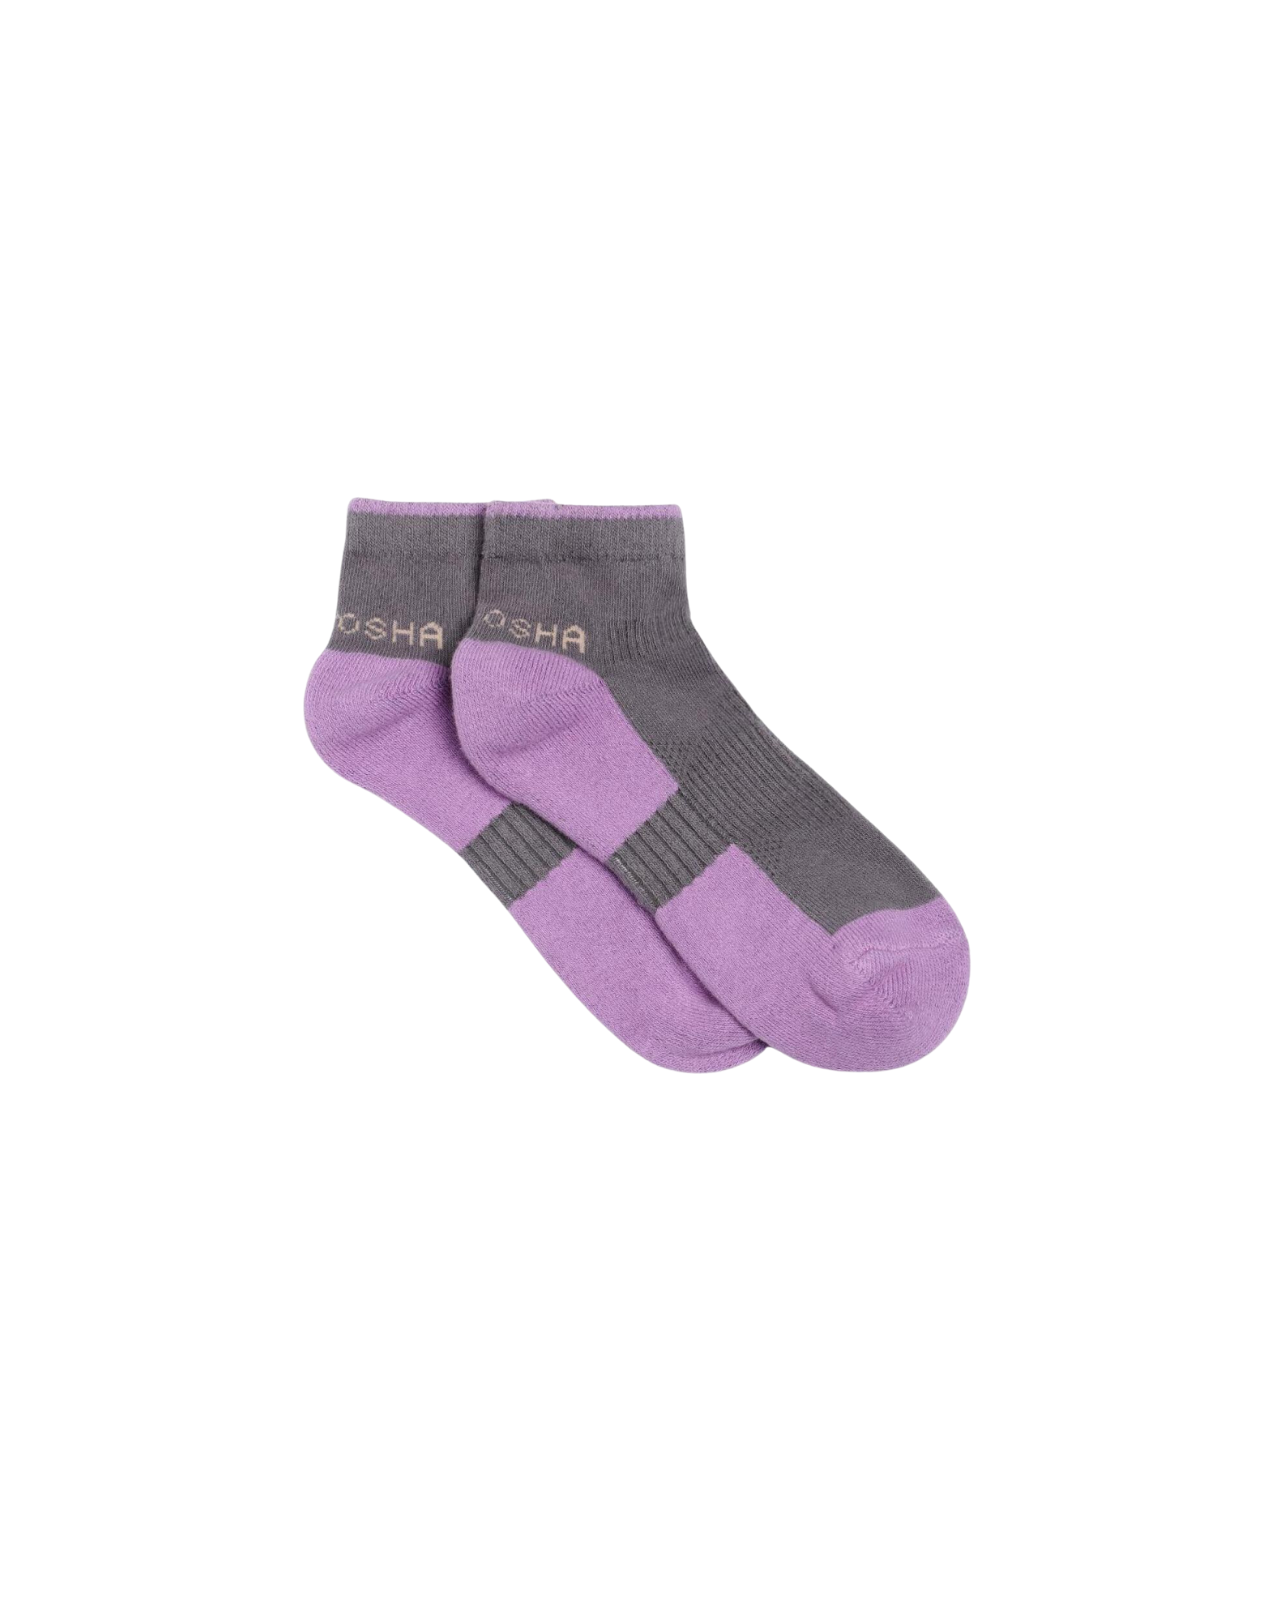 Ankle Length Cotton Sports Socks For Women